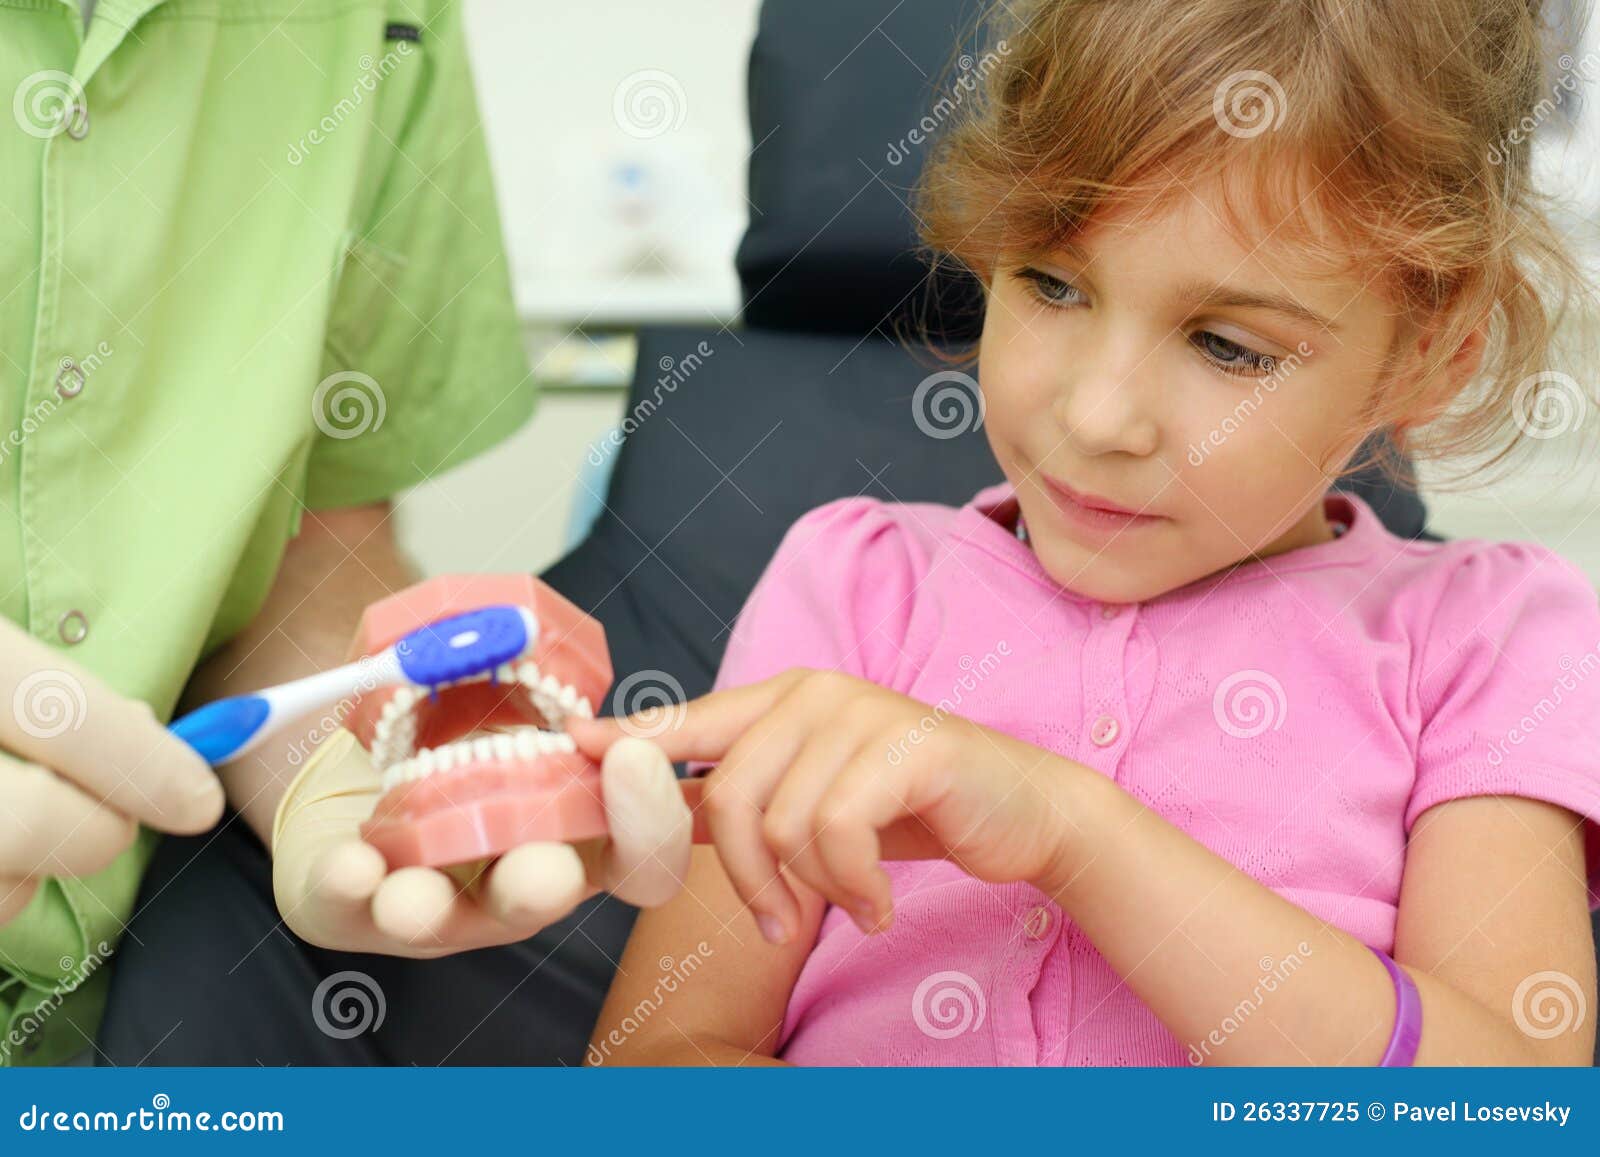 Girl Looks How To Correctly Brush Teeth Stock Image I